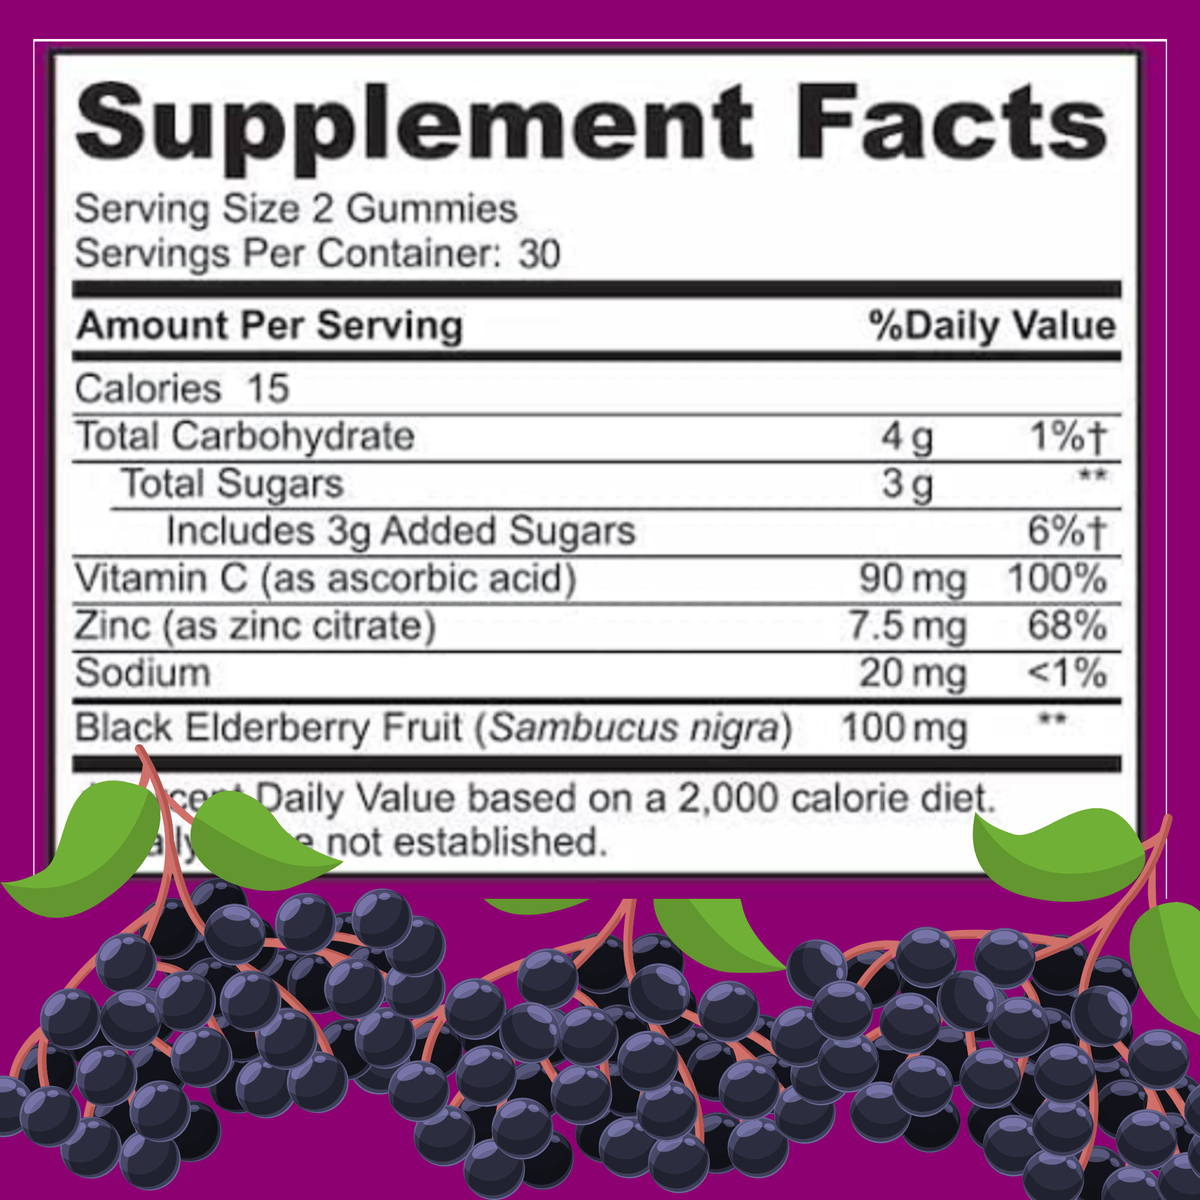 Herman Organic Vitamins &amp; Supplements Herman Organic Elderberry Gummies